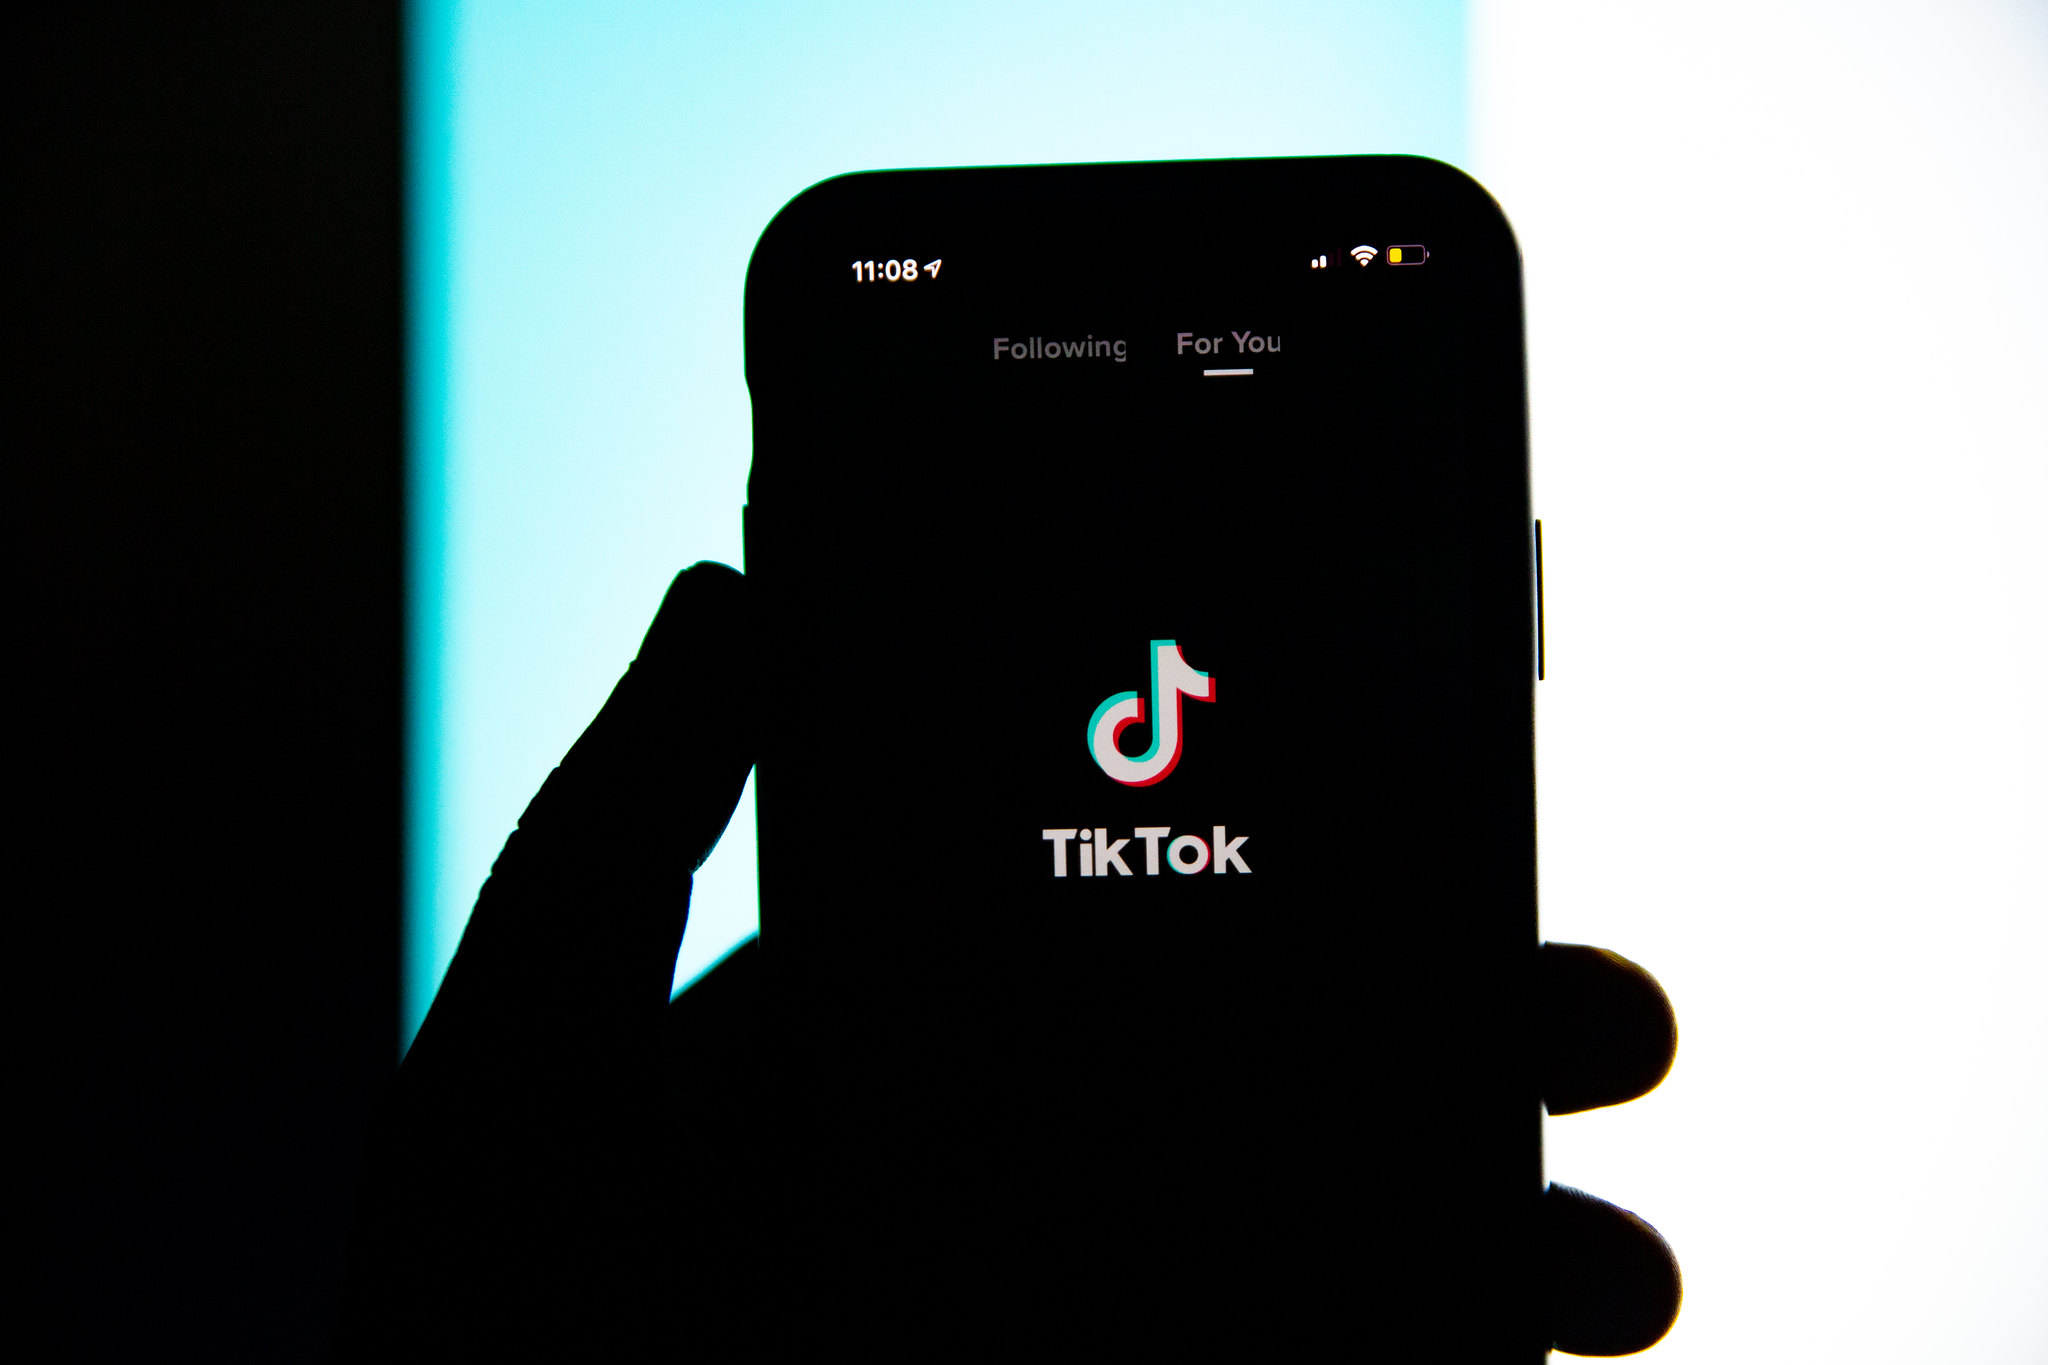 "TikTok" by Solen Feyissa is licensed under CC BY-SA 2.0.